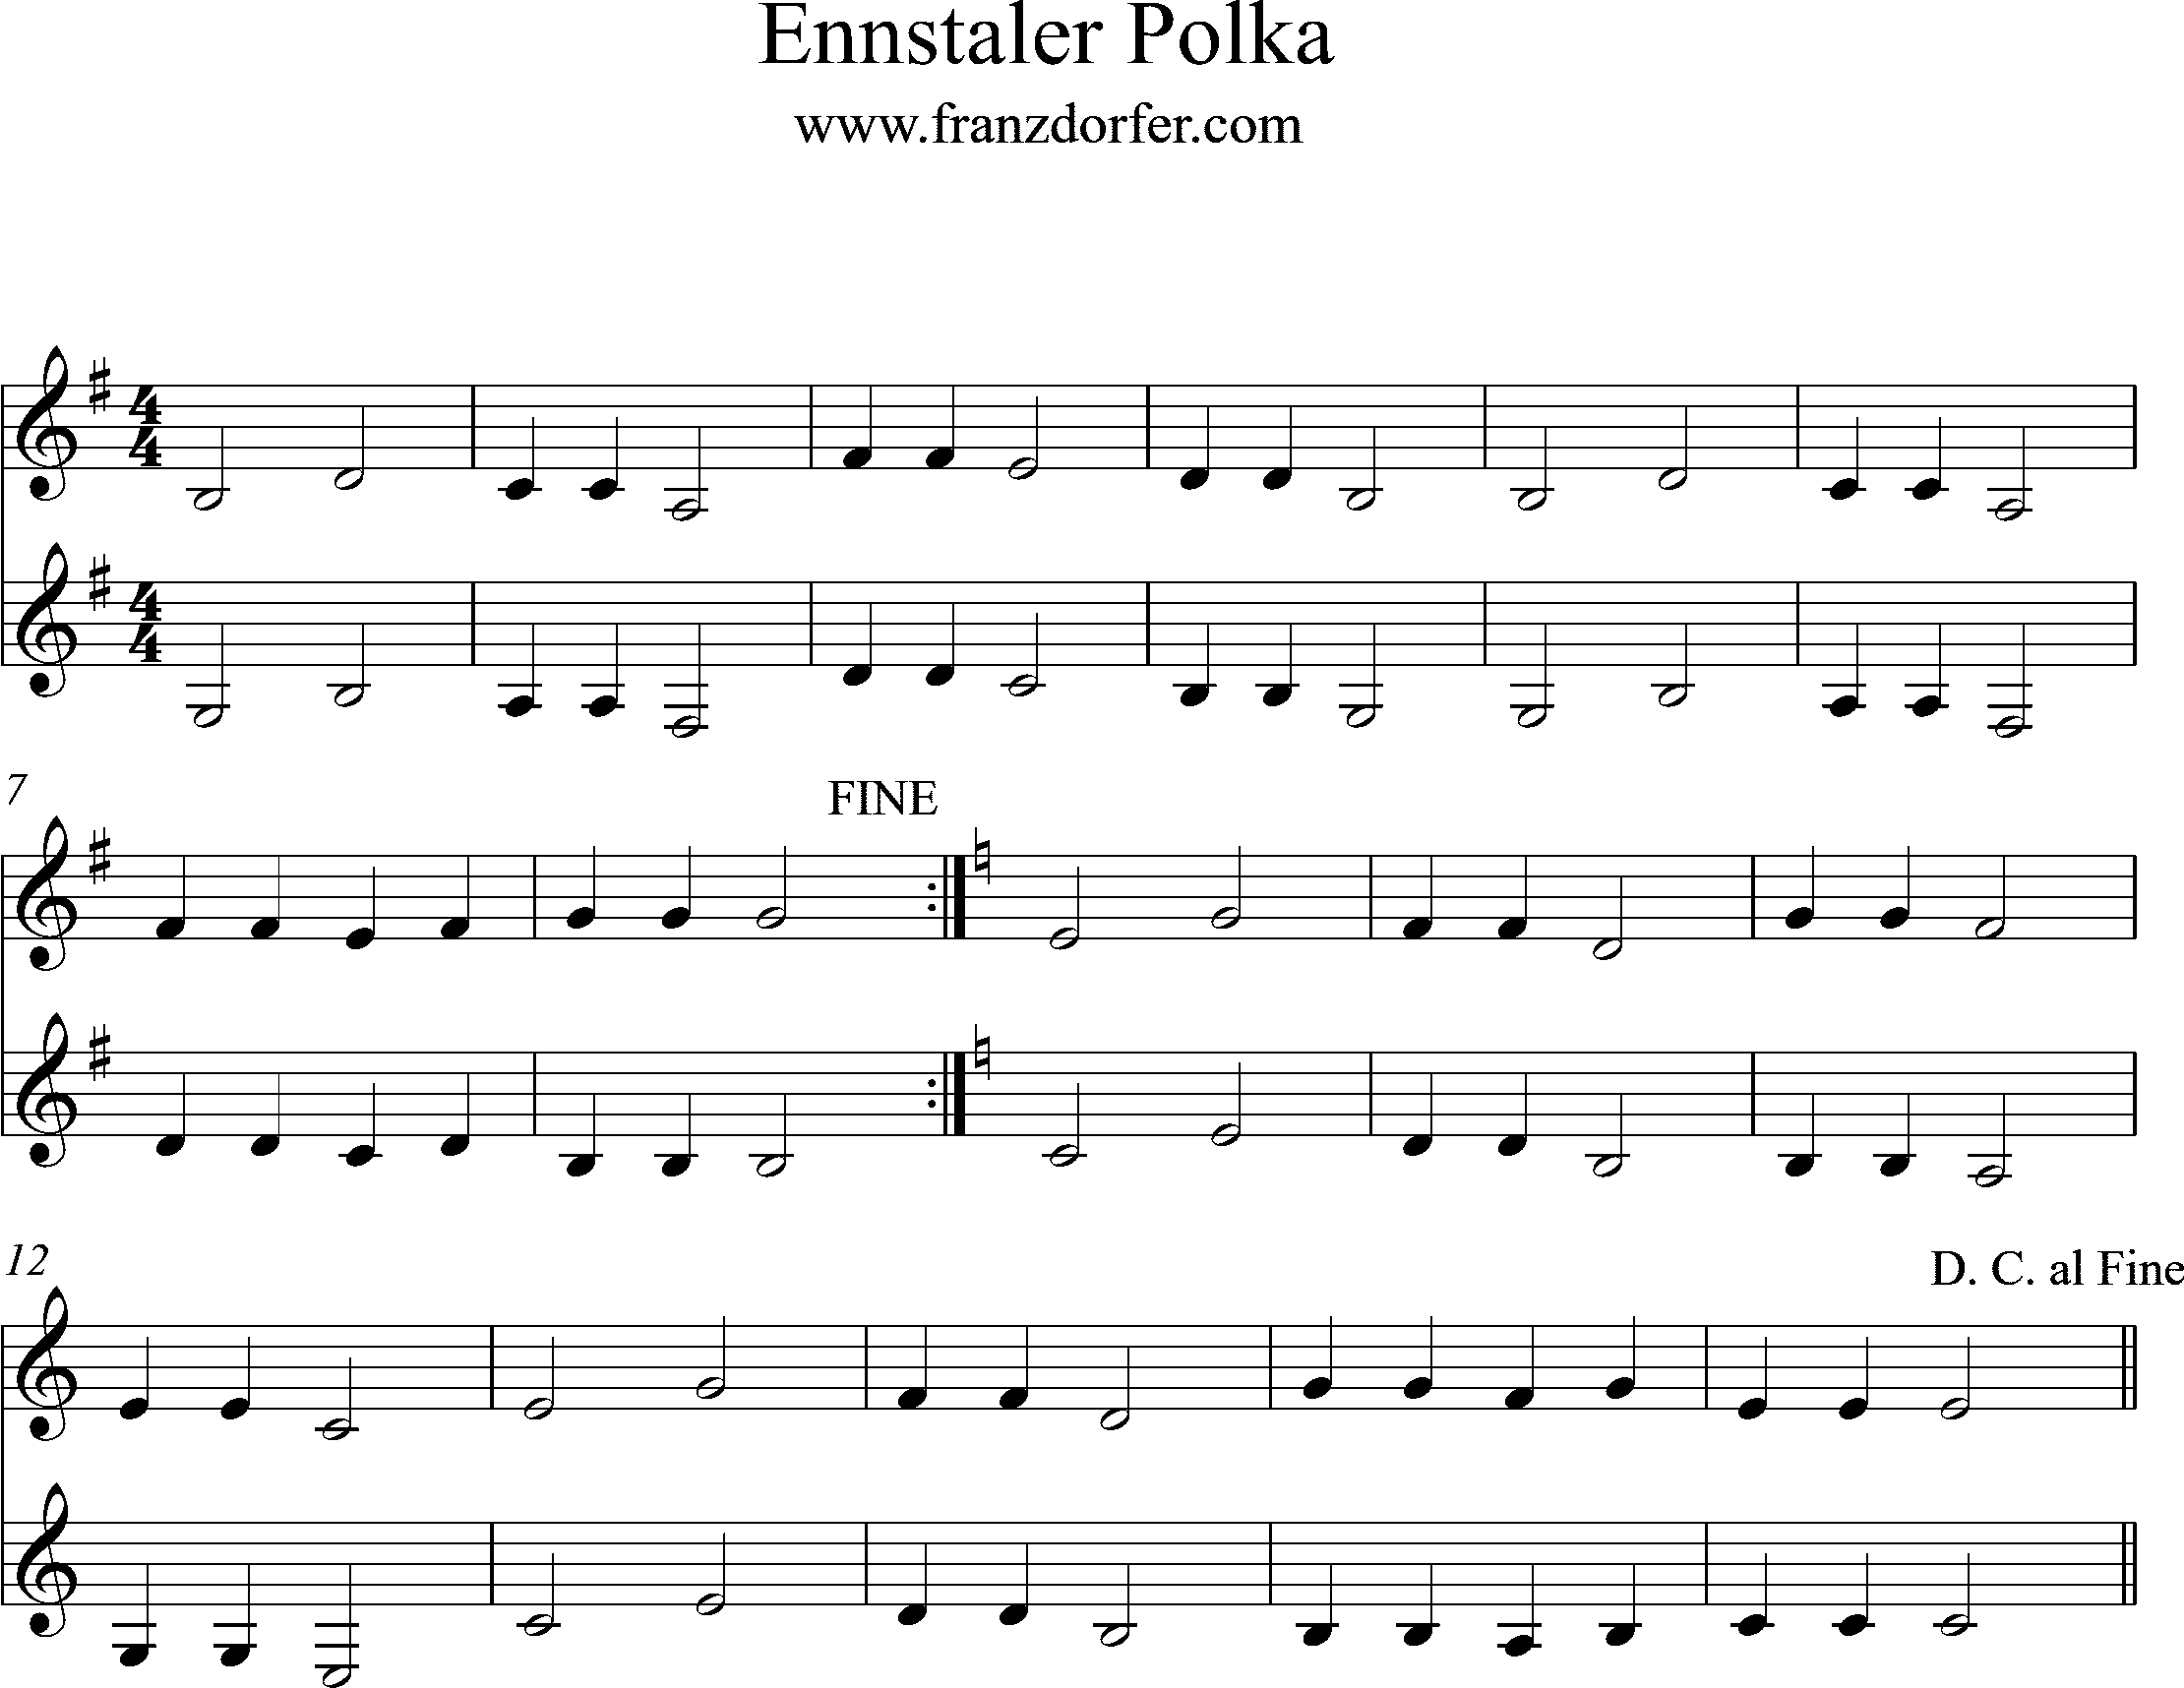 noten, klarinette - Ennstaler polka